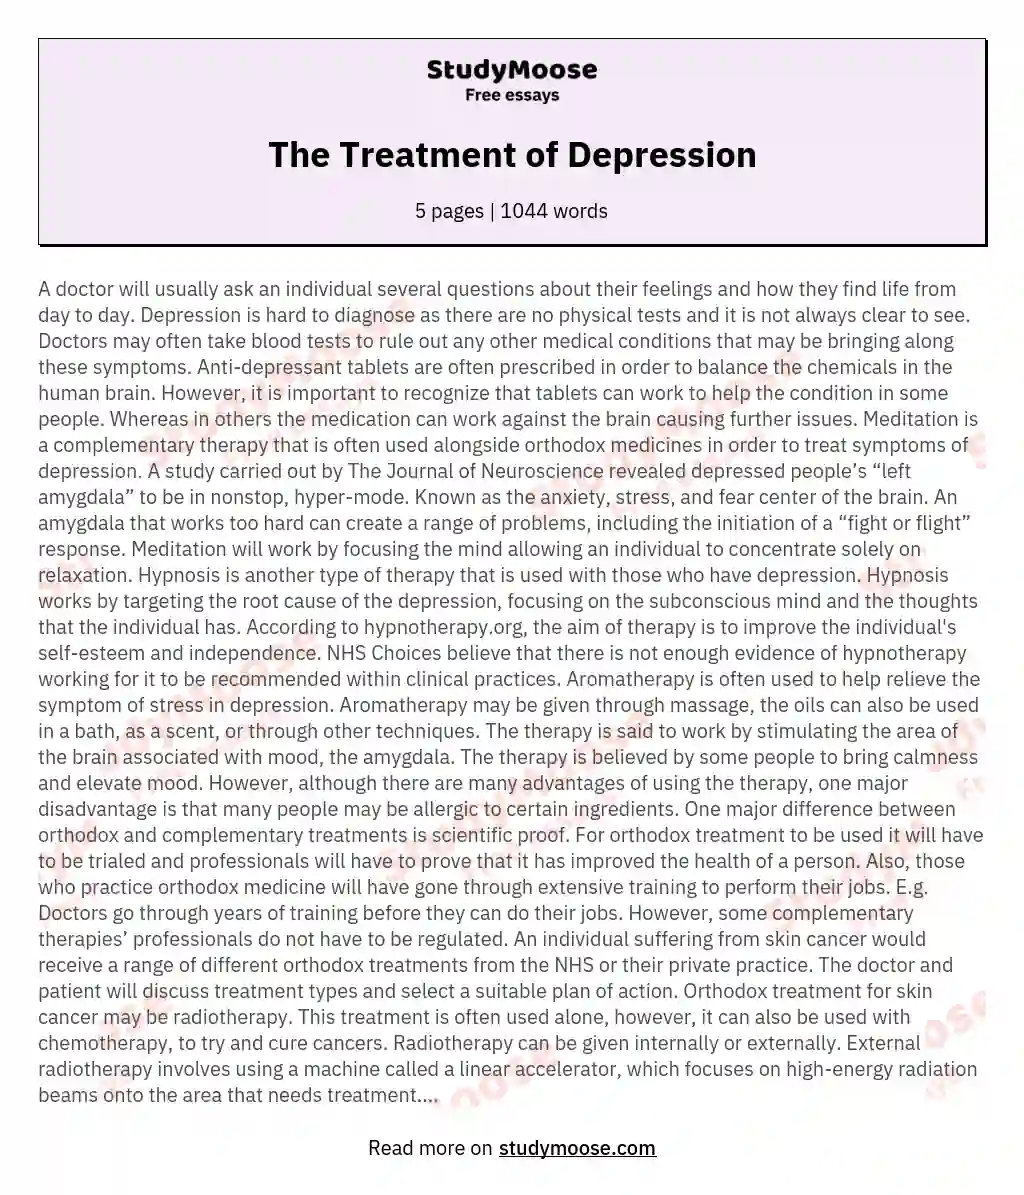 The Treatment of Depression essay